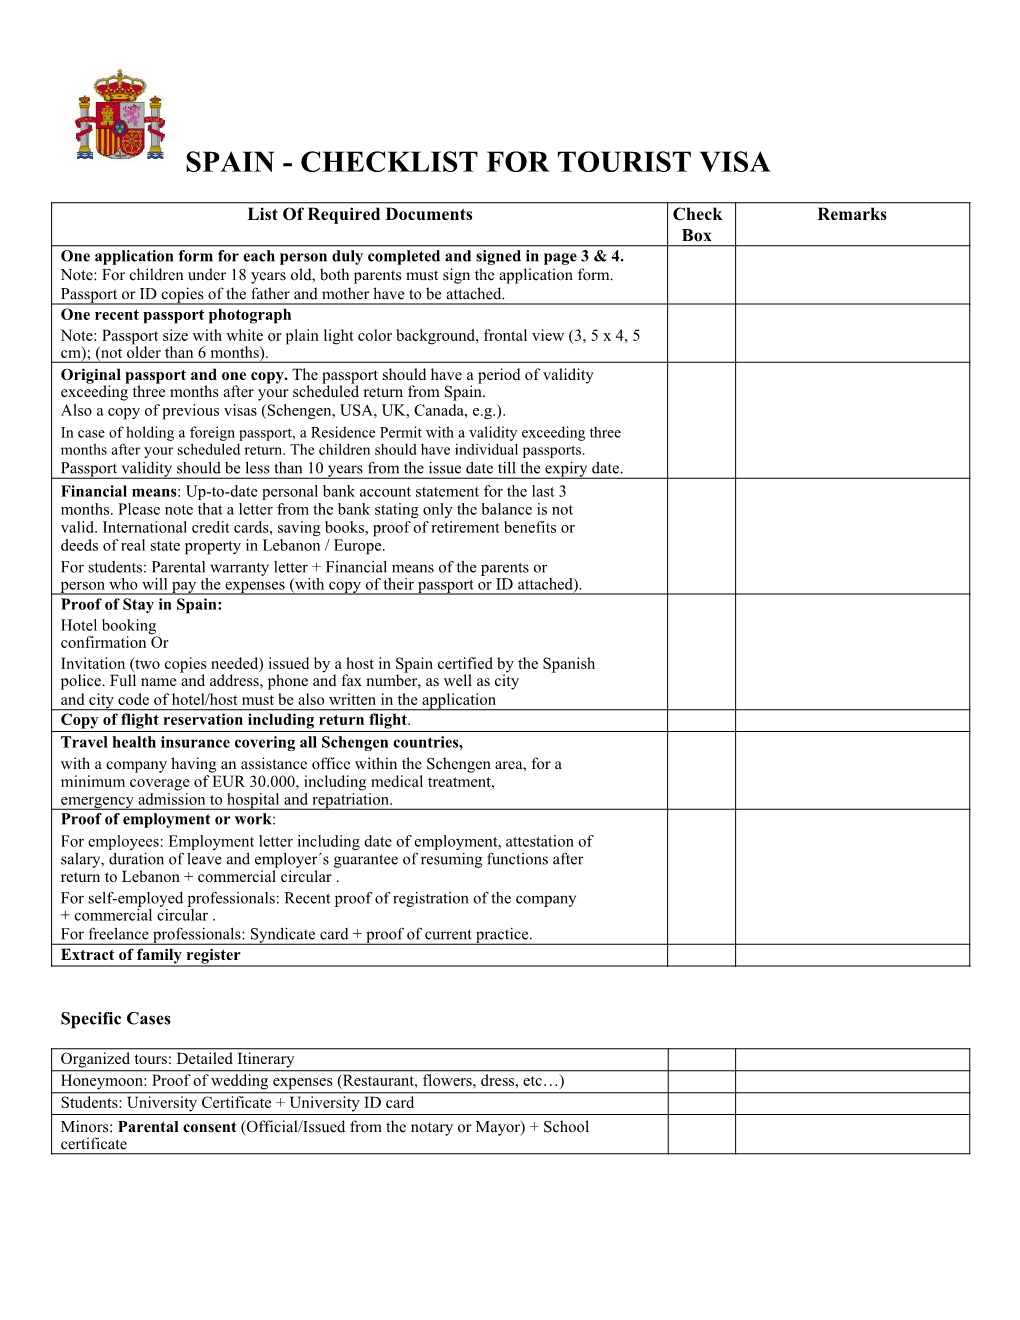 Spain - Checklist for Tourist Visa